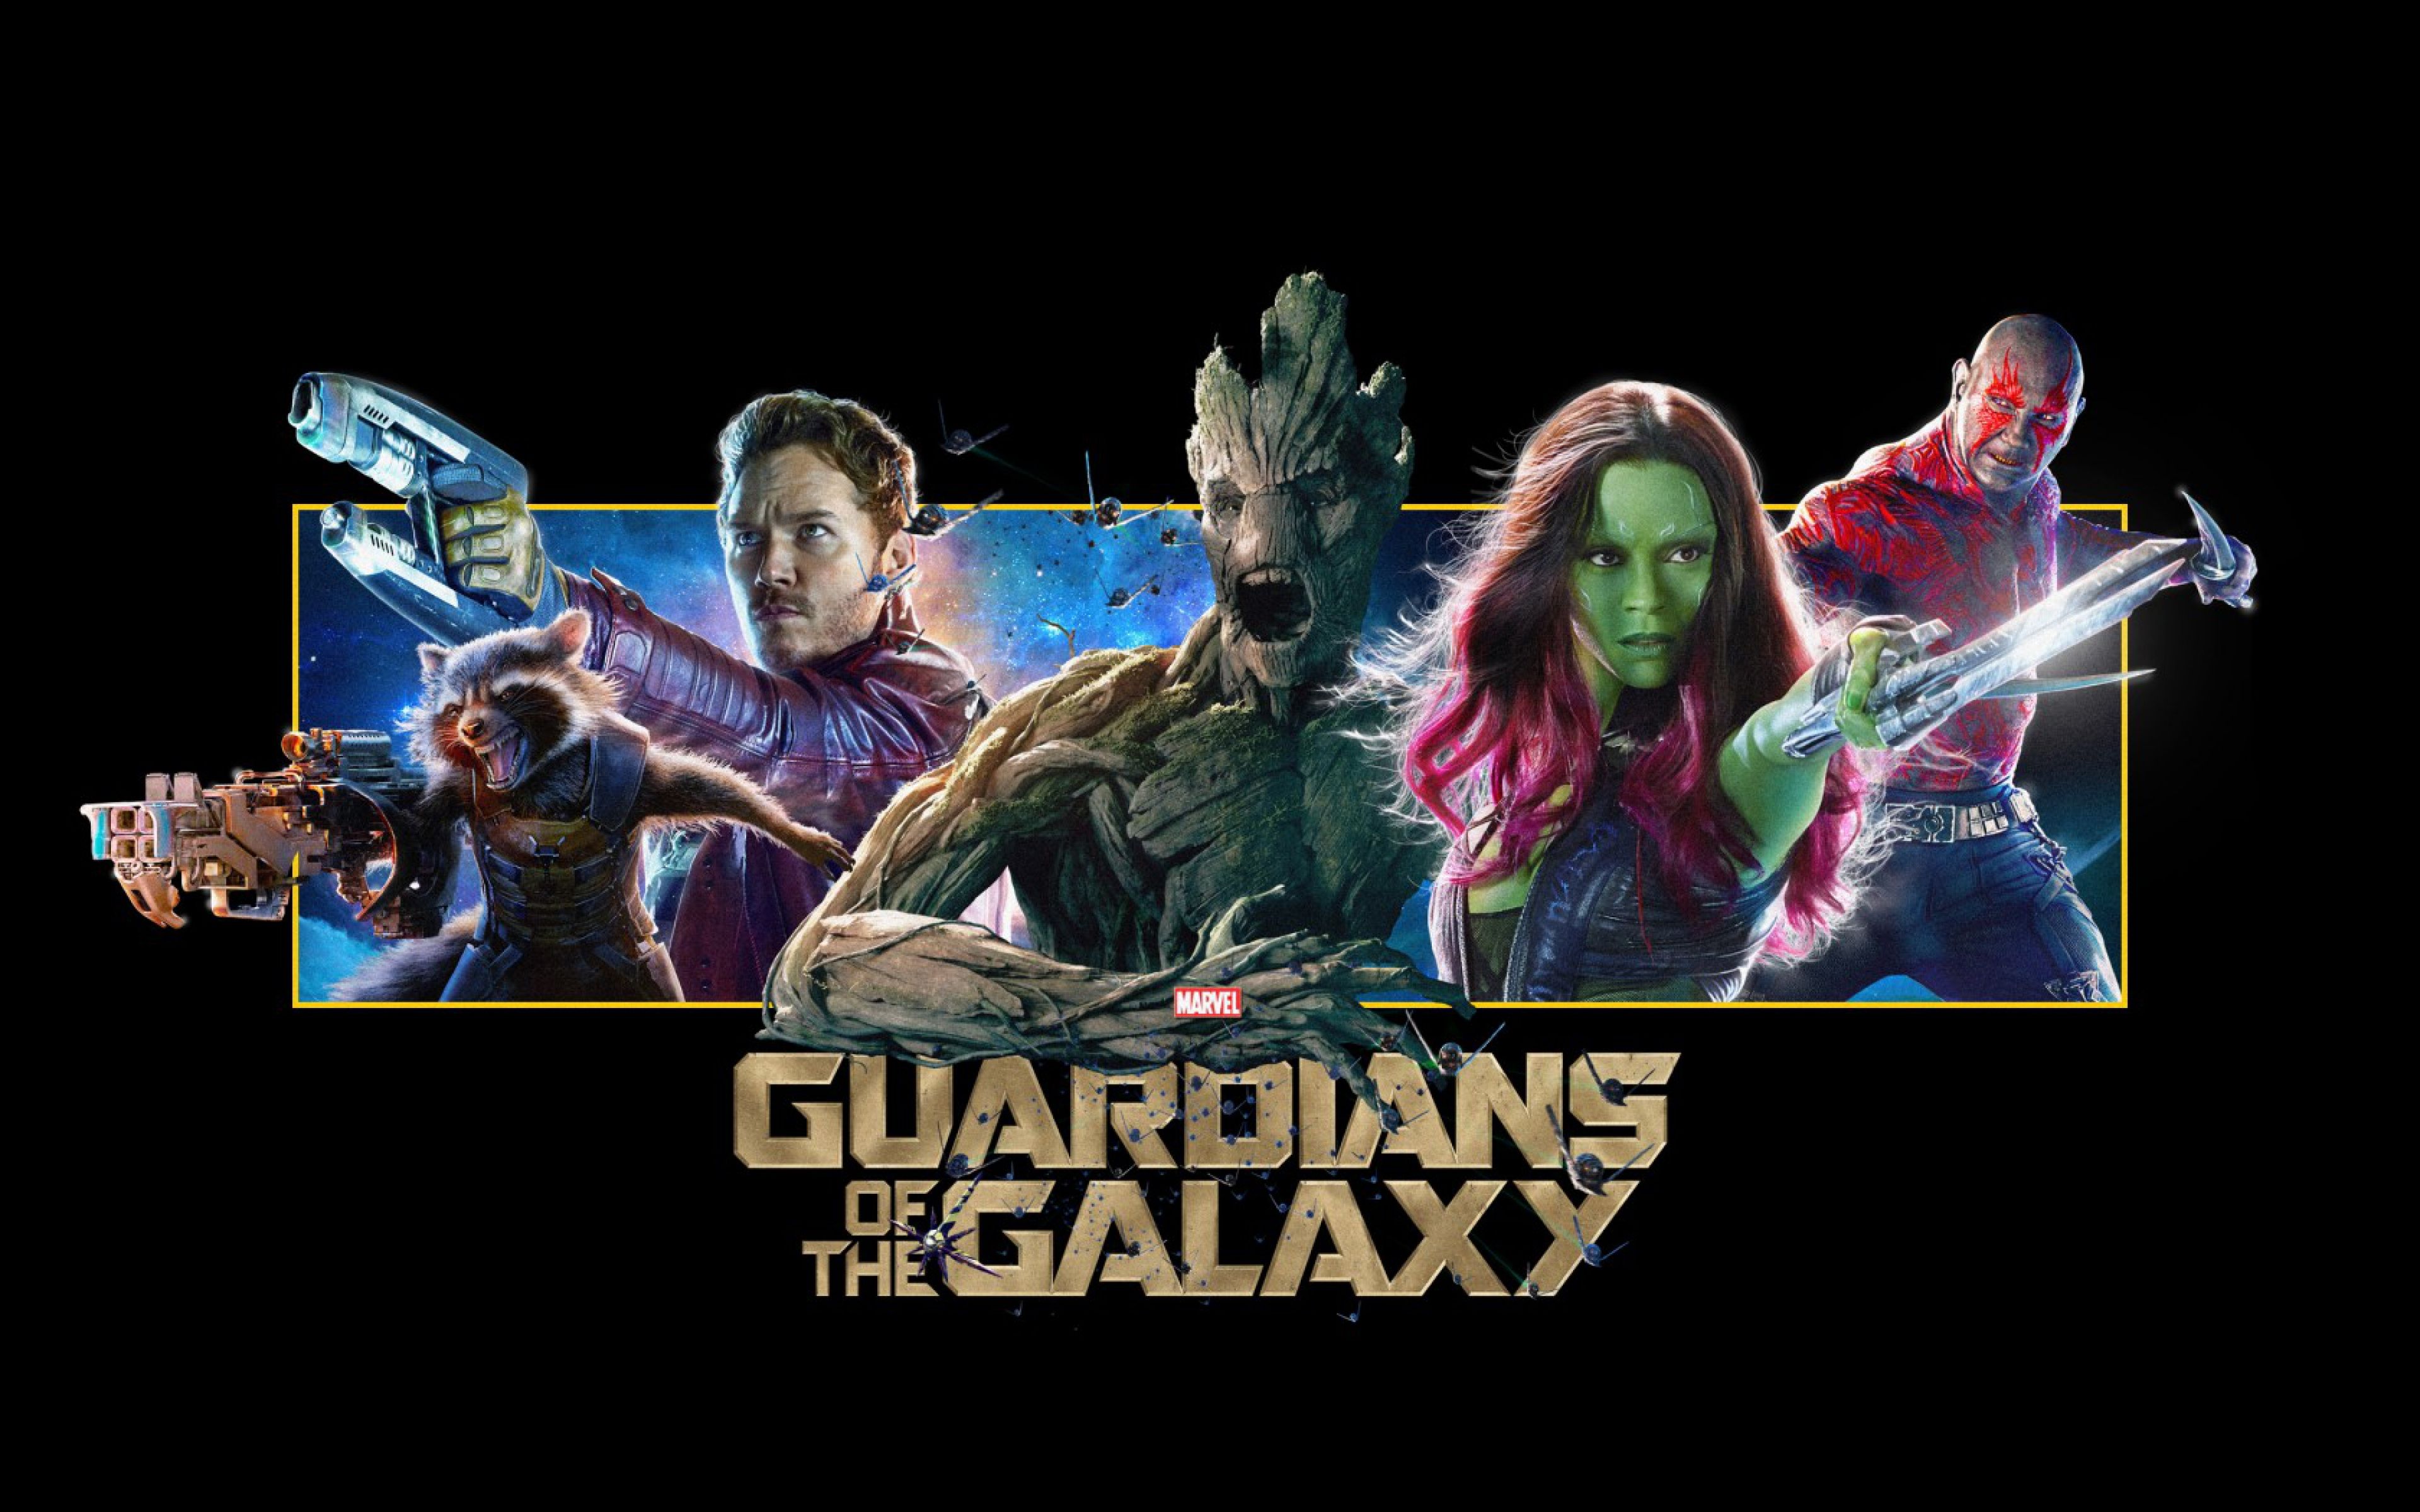 Guardians Of The Galaxy HD Desktop Wallpaper. Guardians of the galaxy, Avengers image, Avengers wallpaper